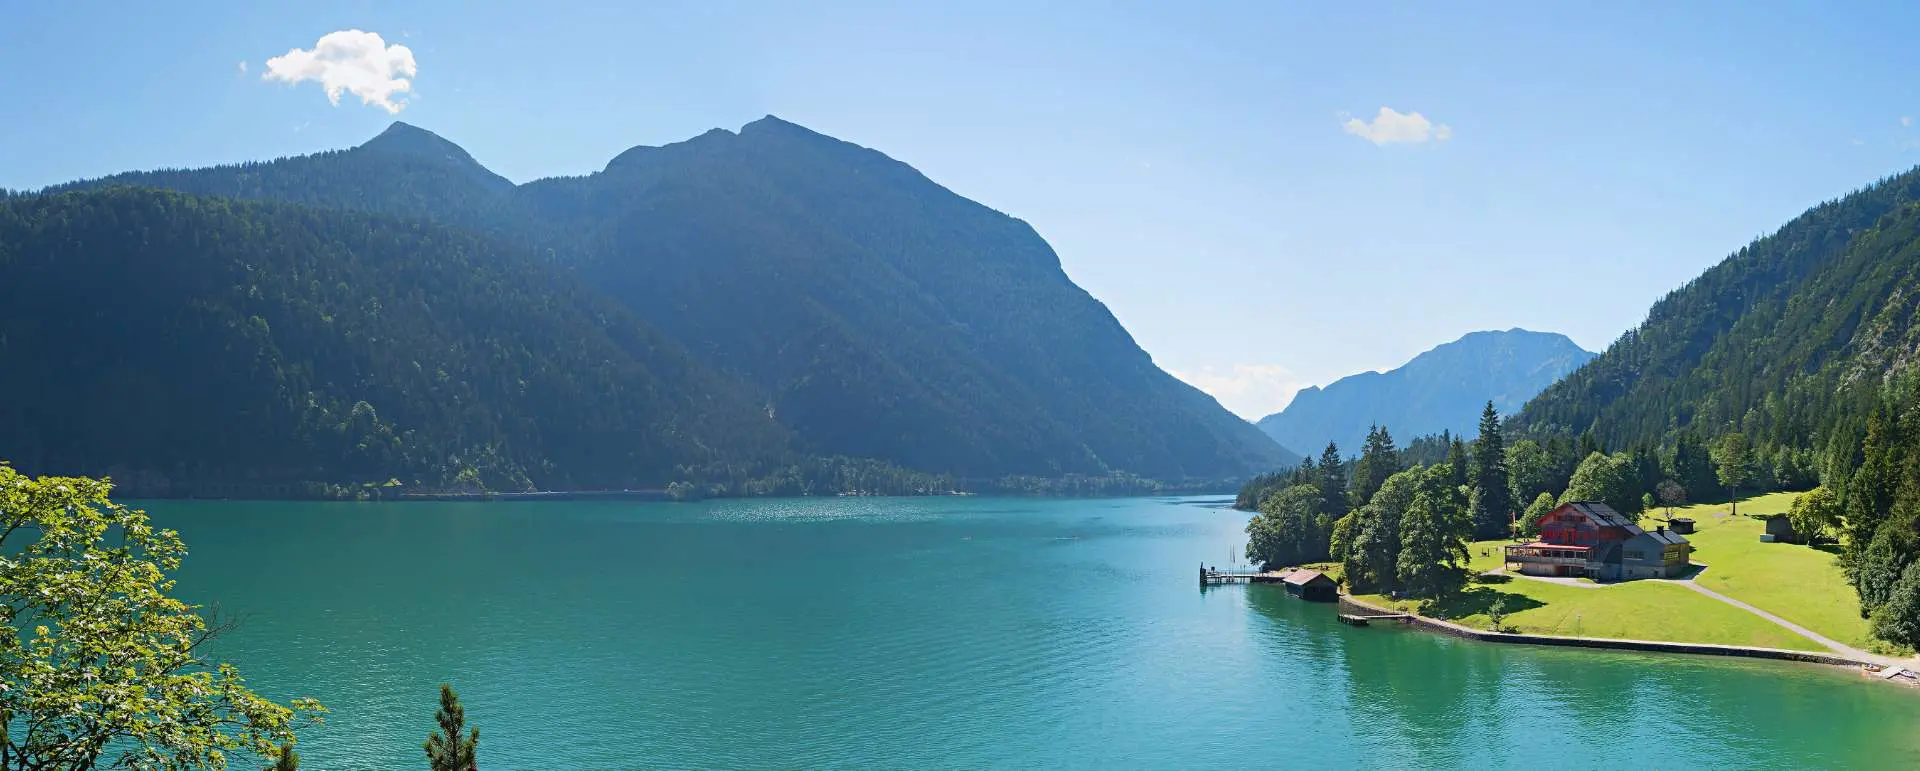 Achen Lake - the destination for christmas celebrations